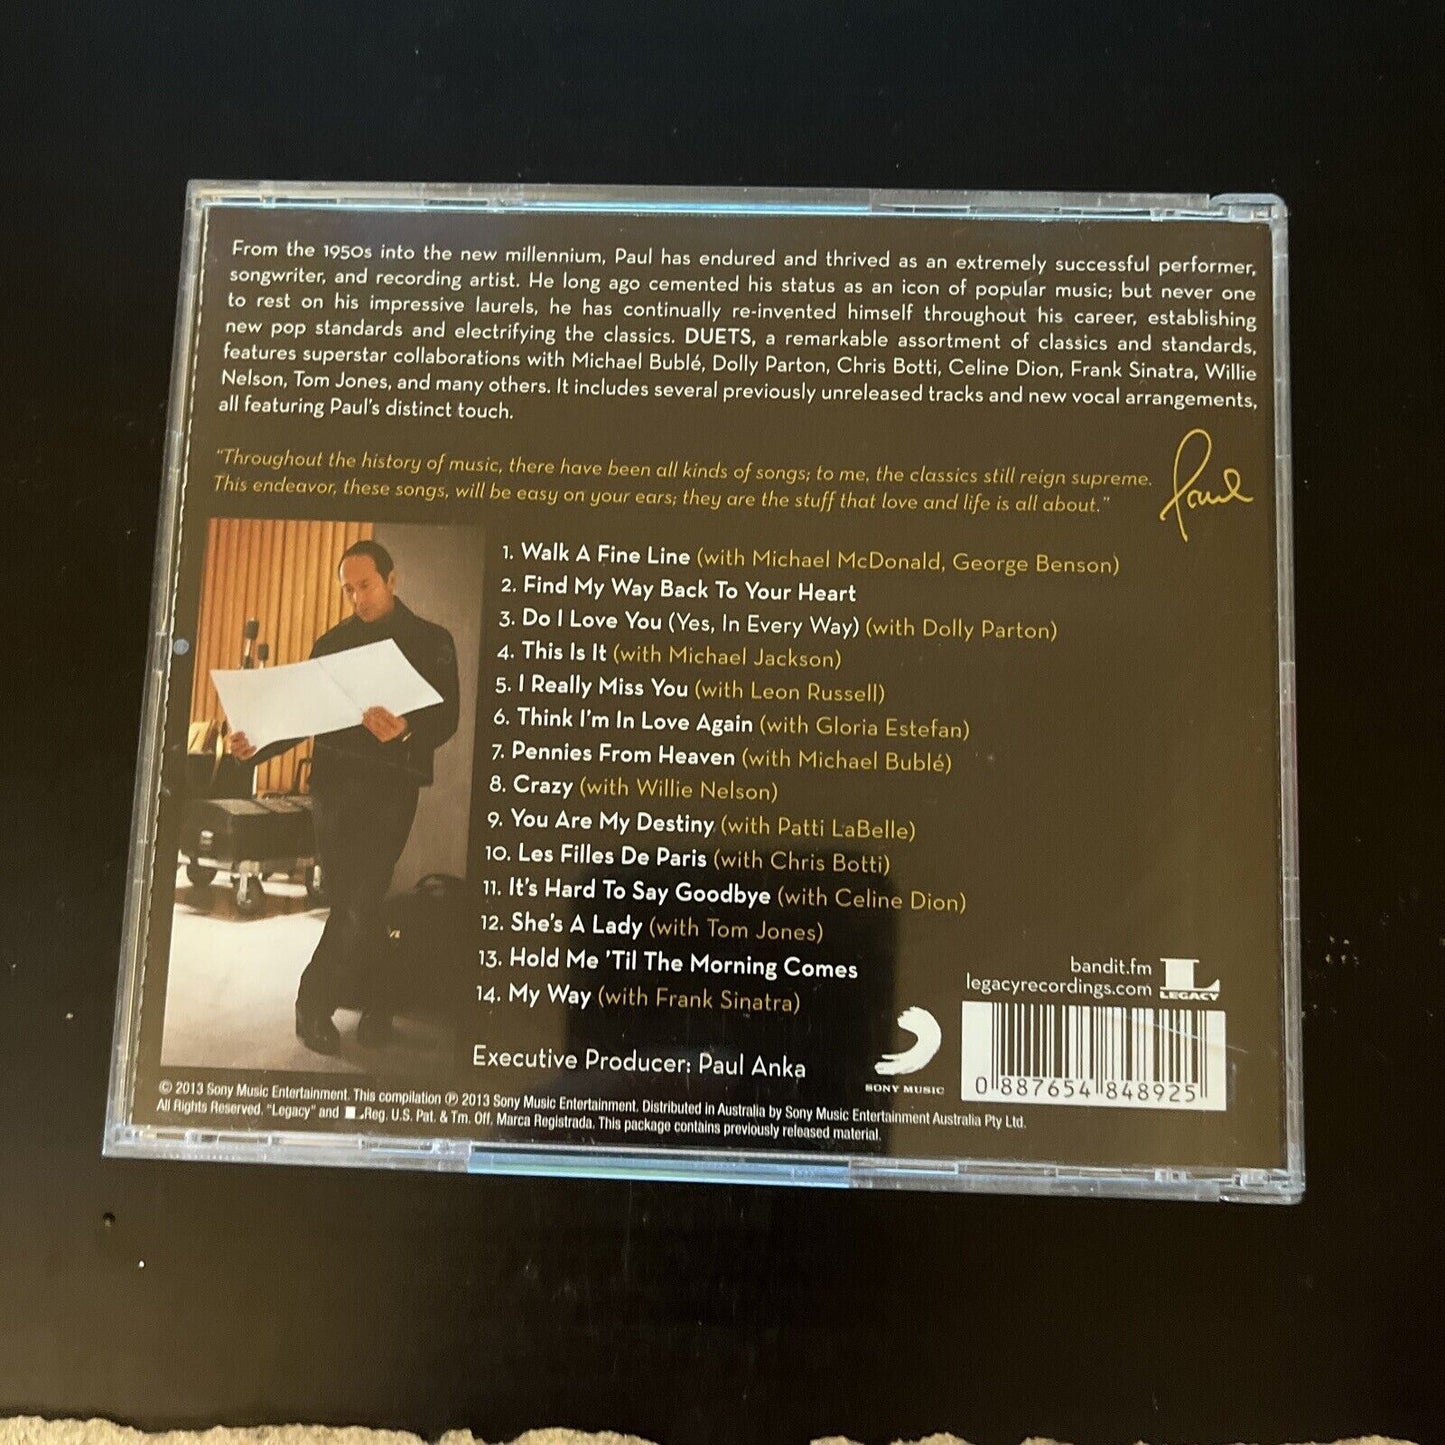 Paul Anka – Duets (CD, 2013)